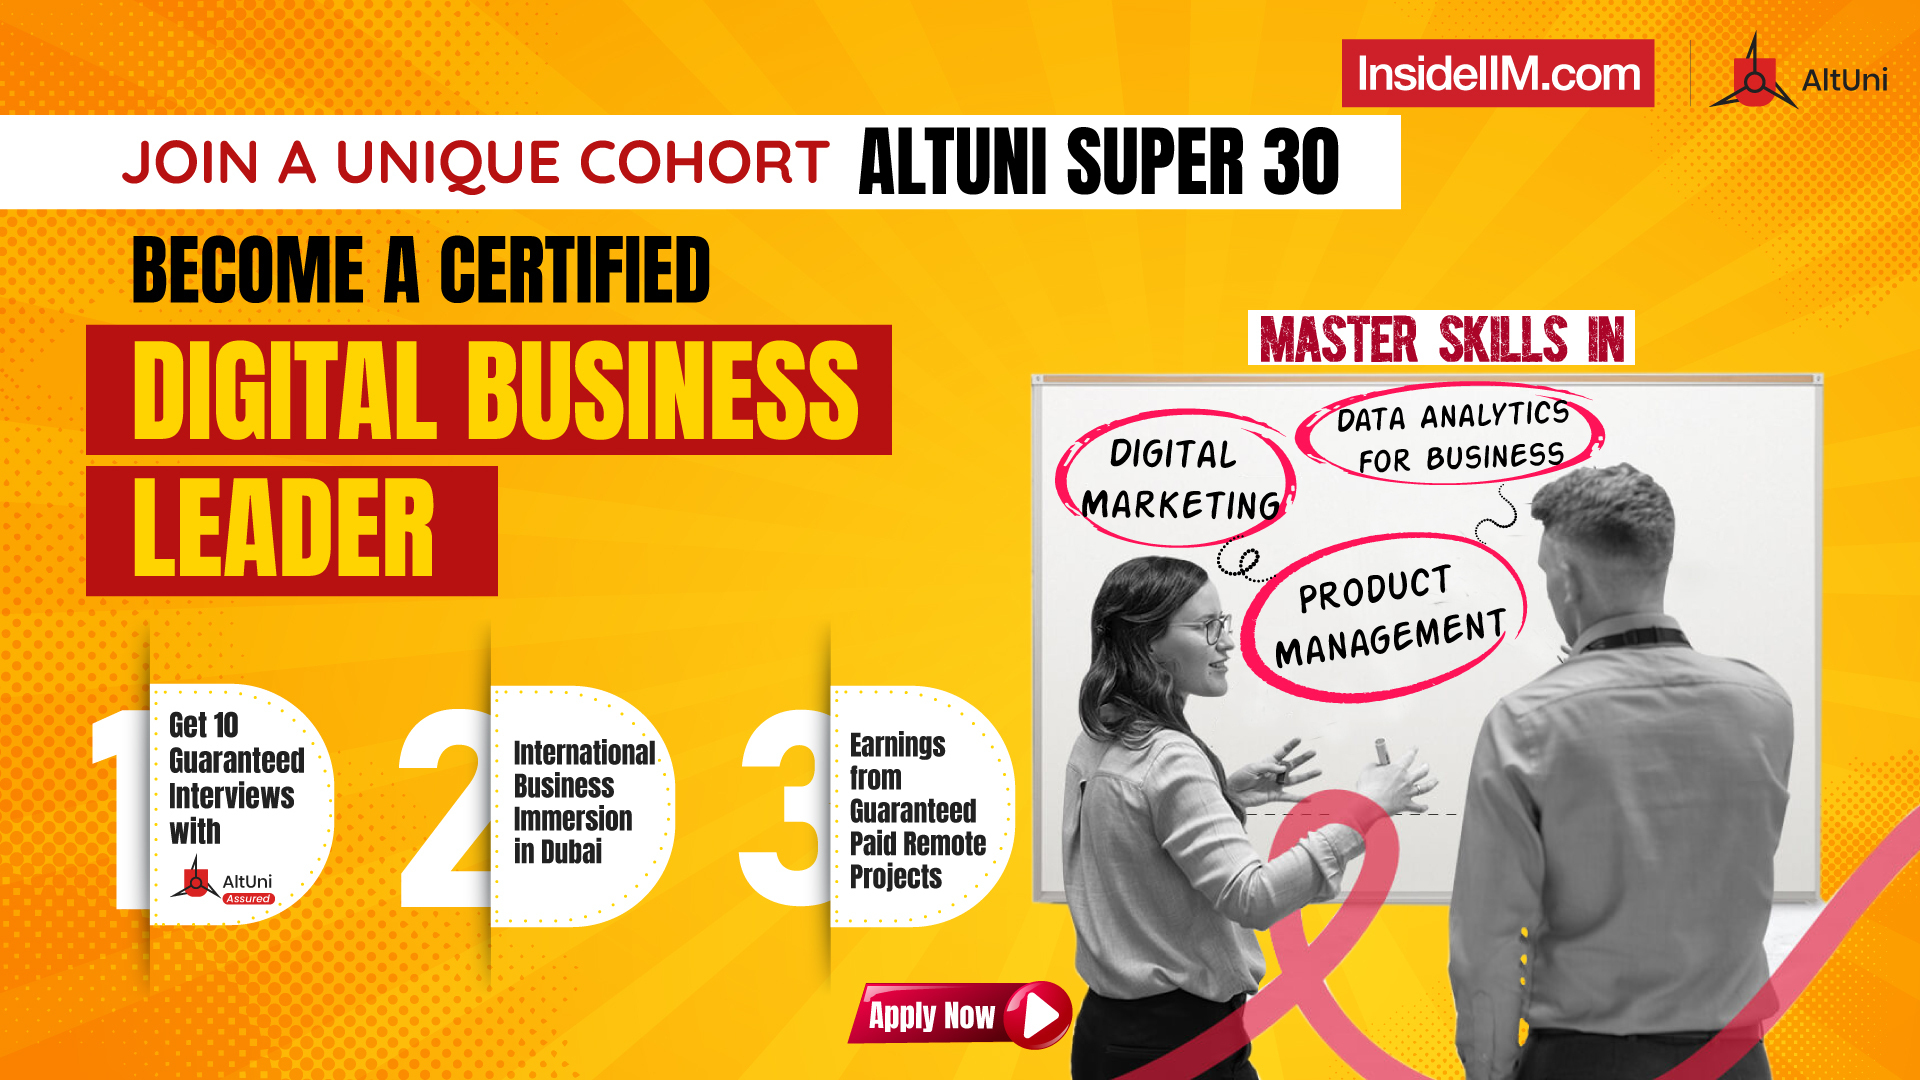 Apply For AltUni Super 30 & Become A Certified Digital Business Leader